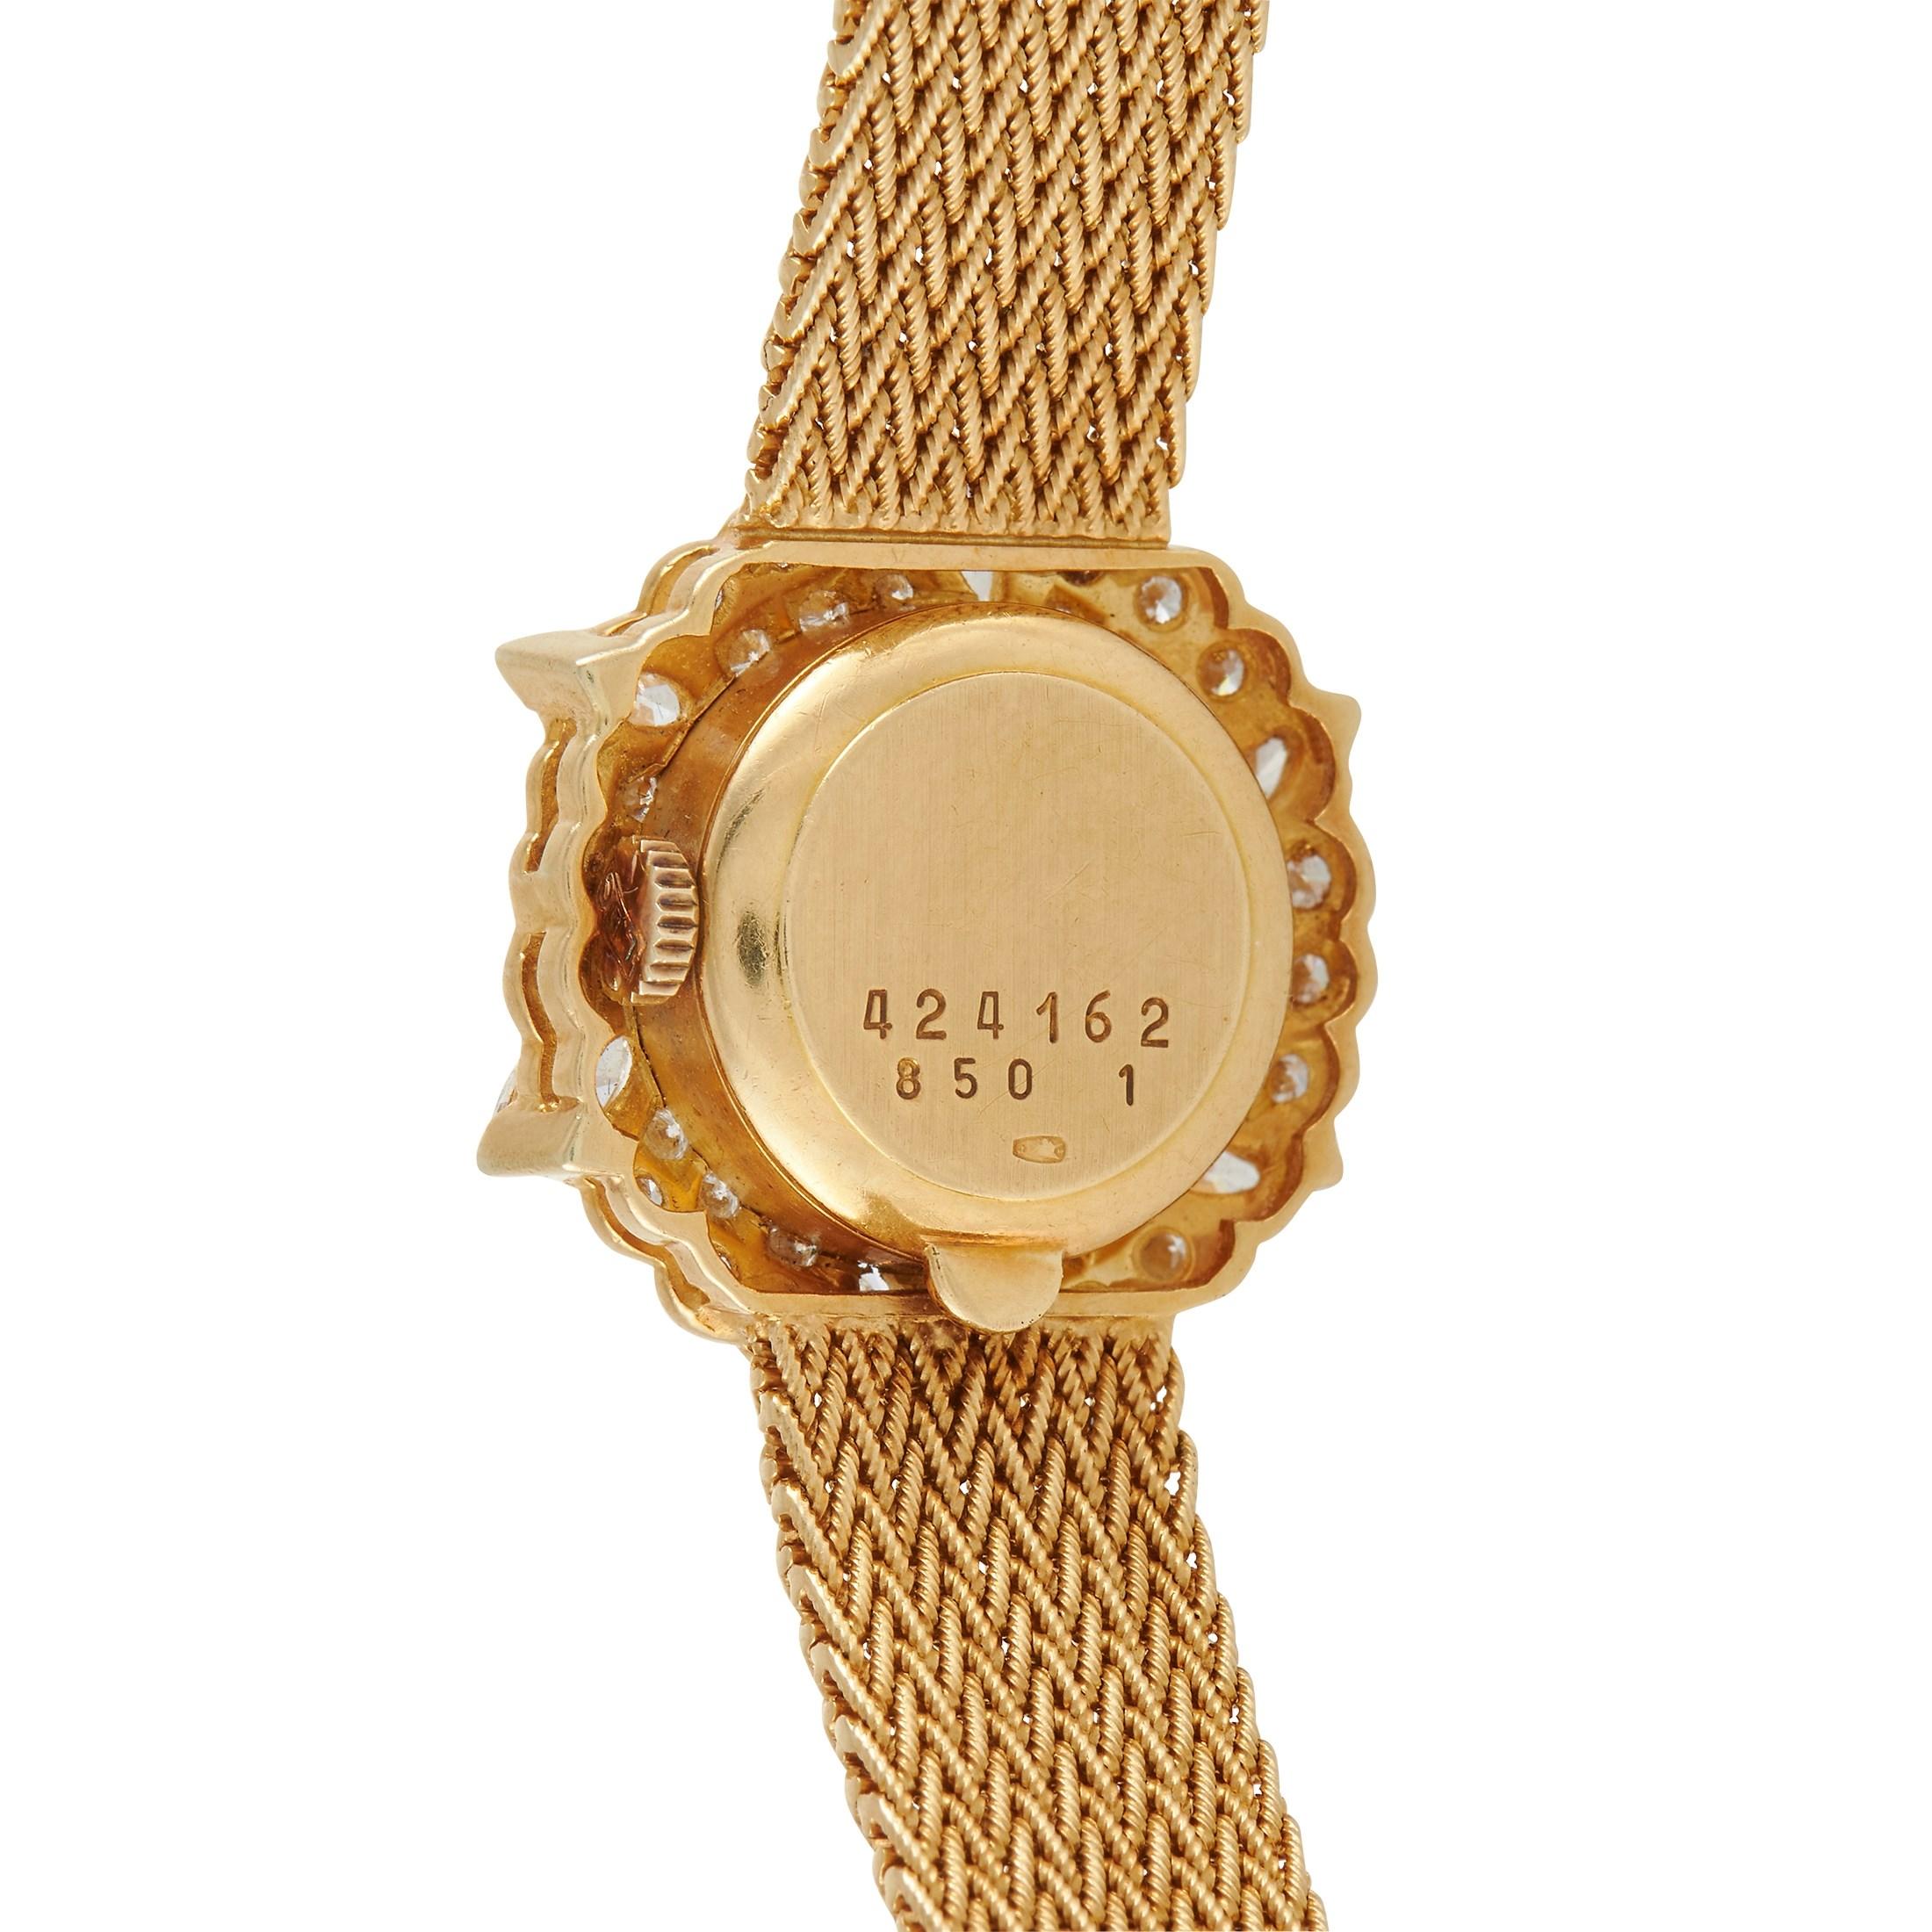 Mixed Cut Chopard 18K Yellow Gold 2.00 Ct Diamond Ladies Watch 424162